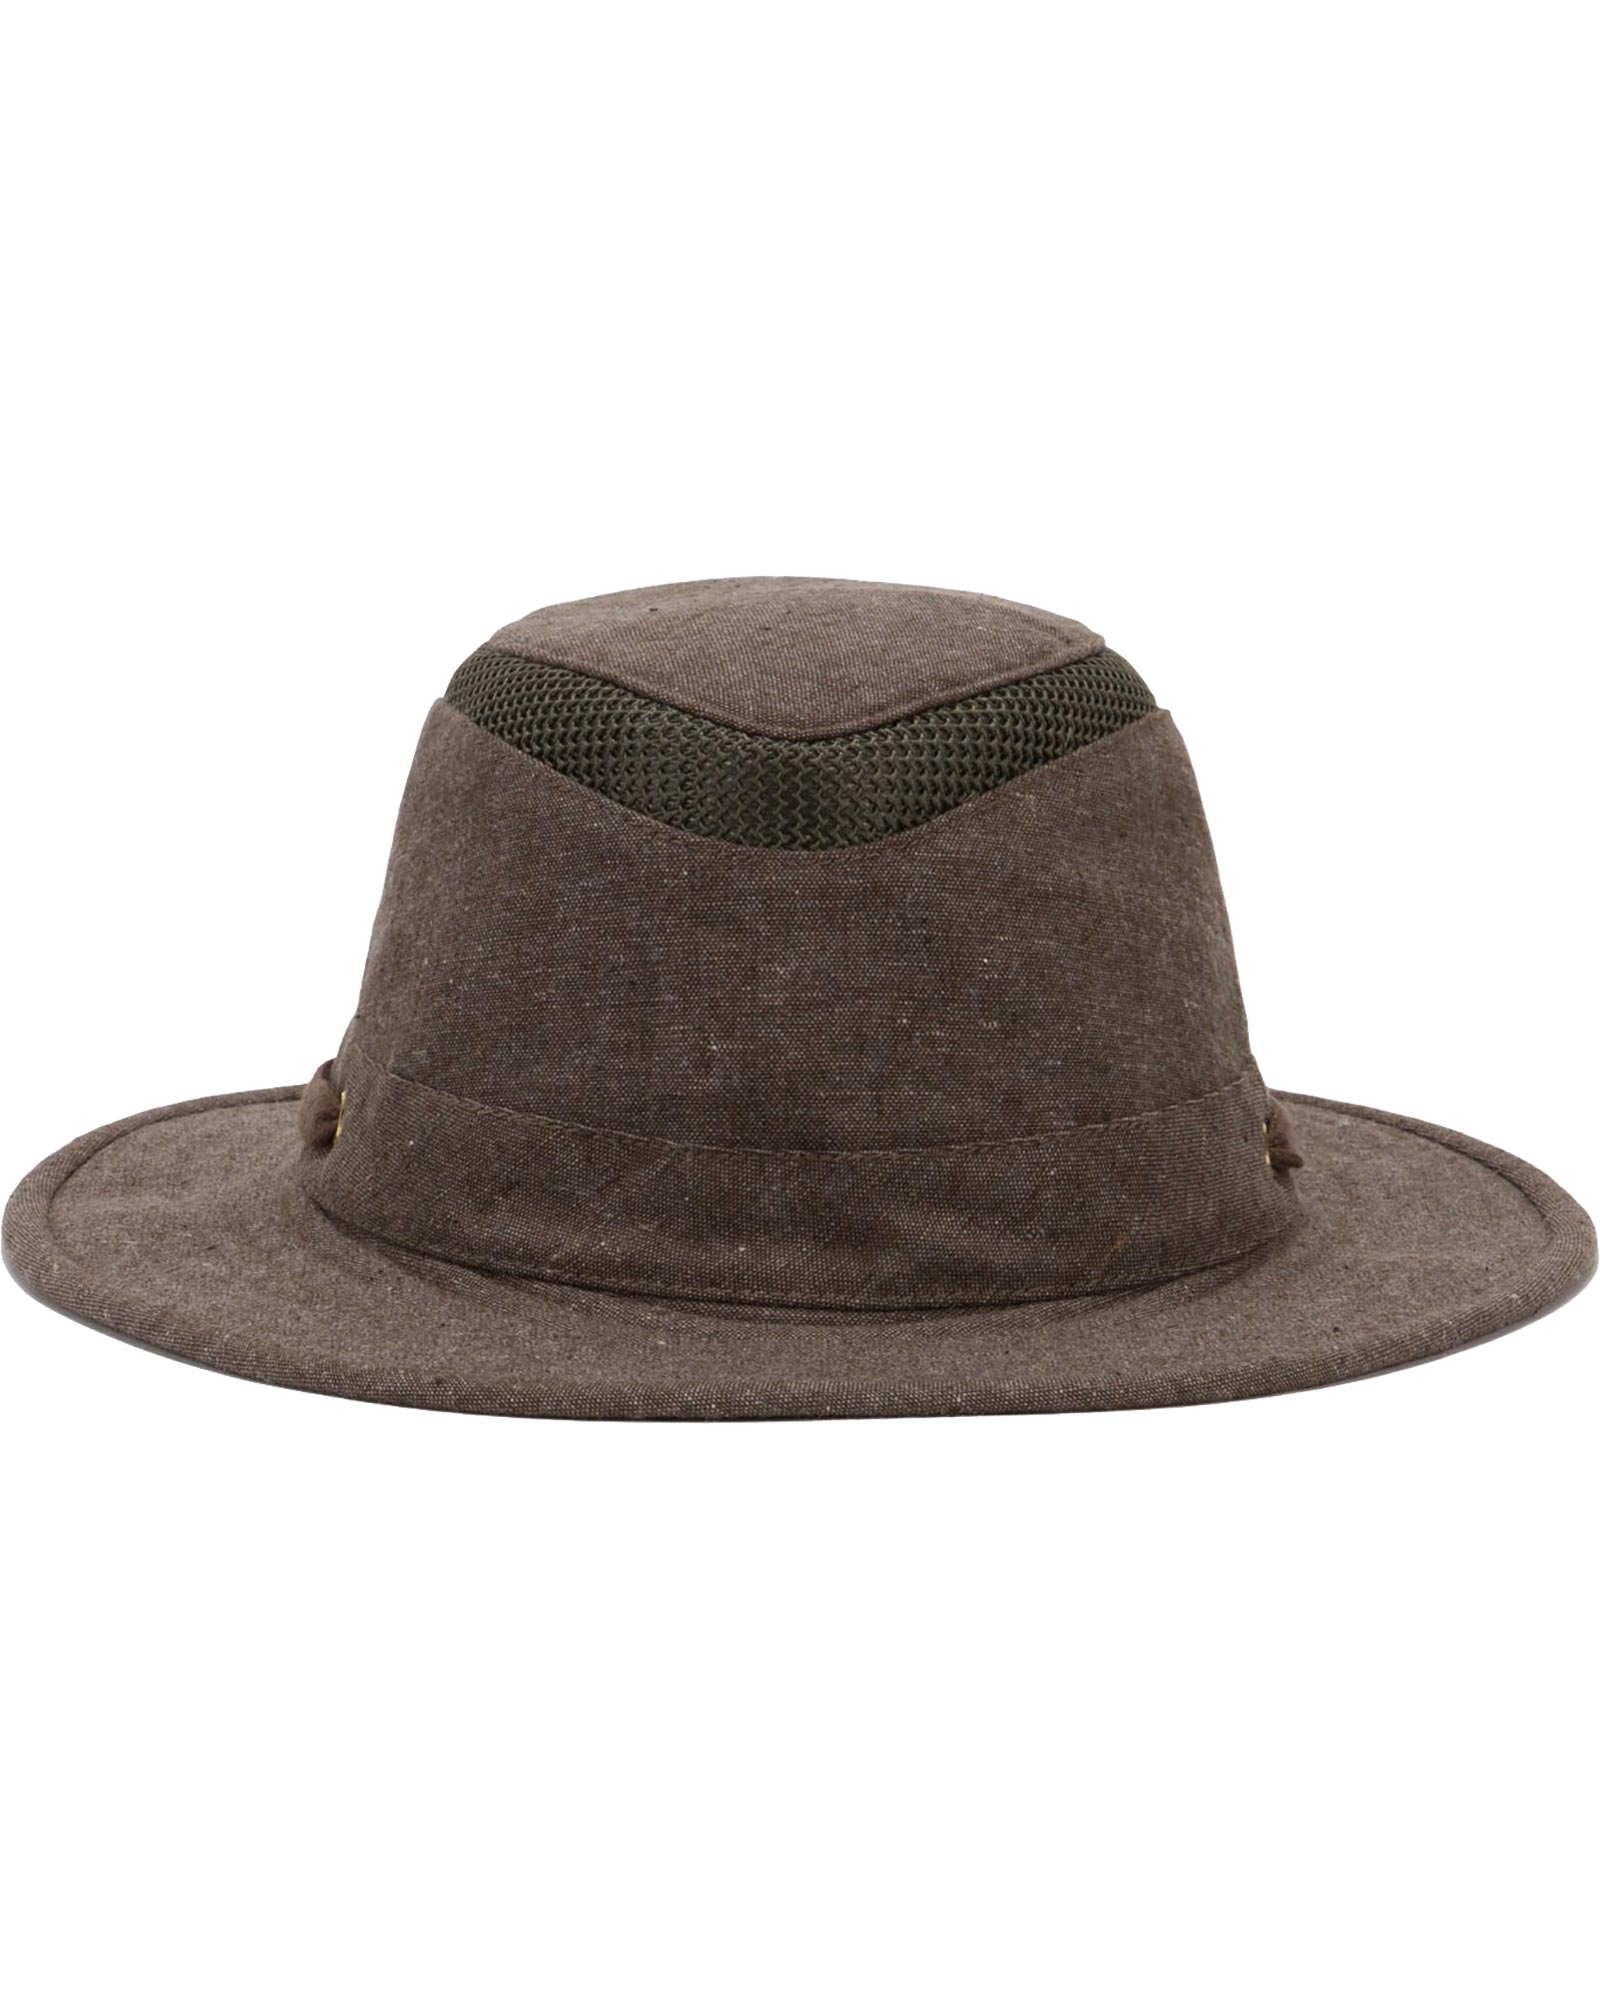 Tilley Recycled Hemp Hat - Brown 7 1/8